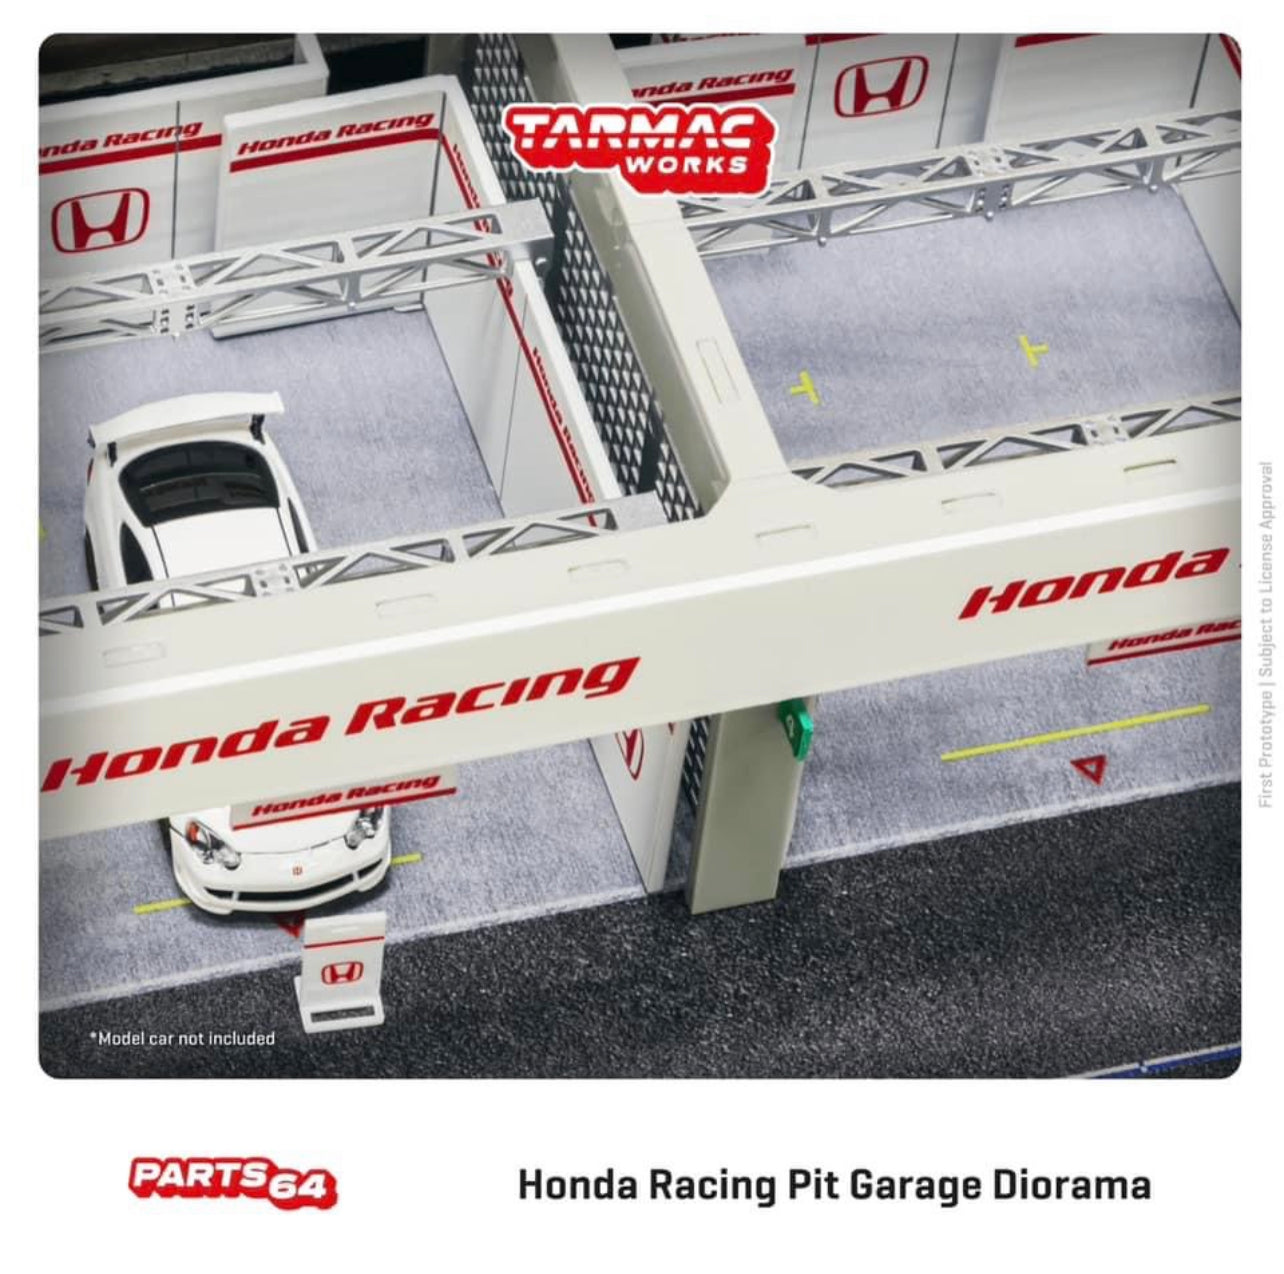 Tarmac Works Honda Racing Pit Garage Diorama